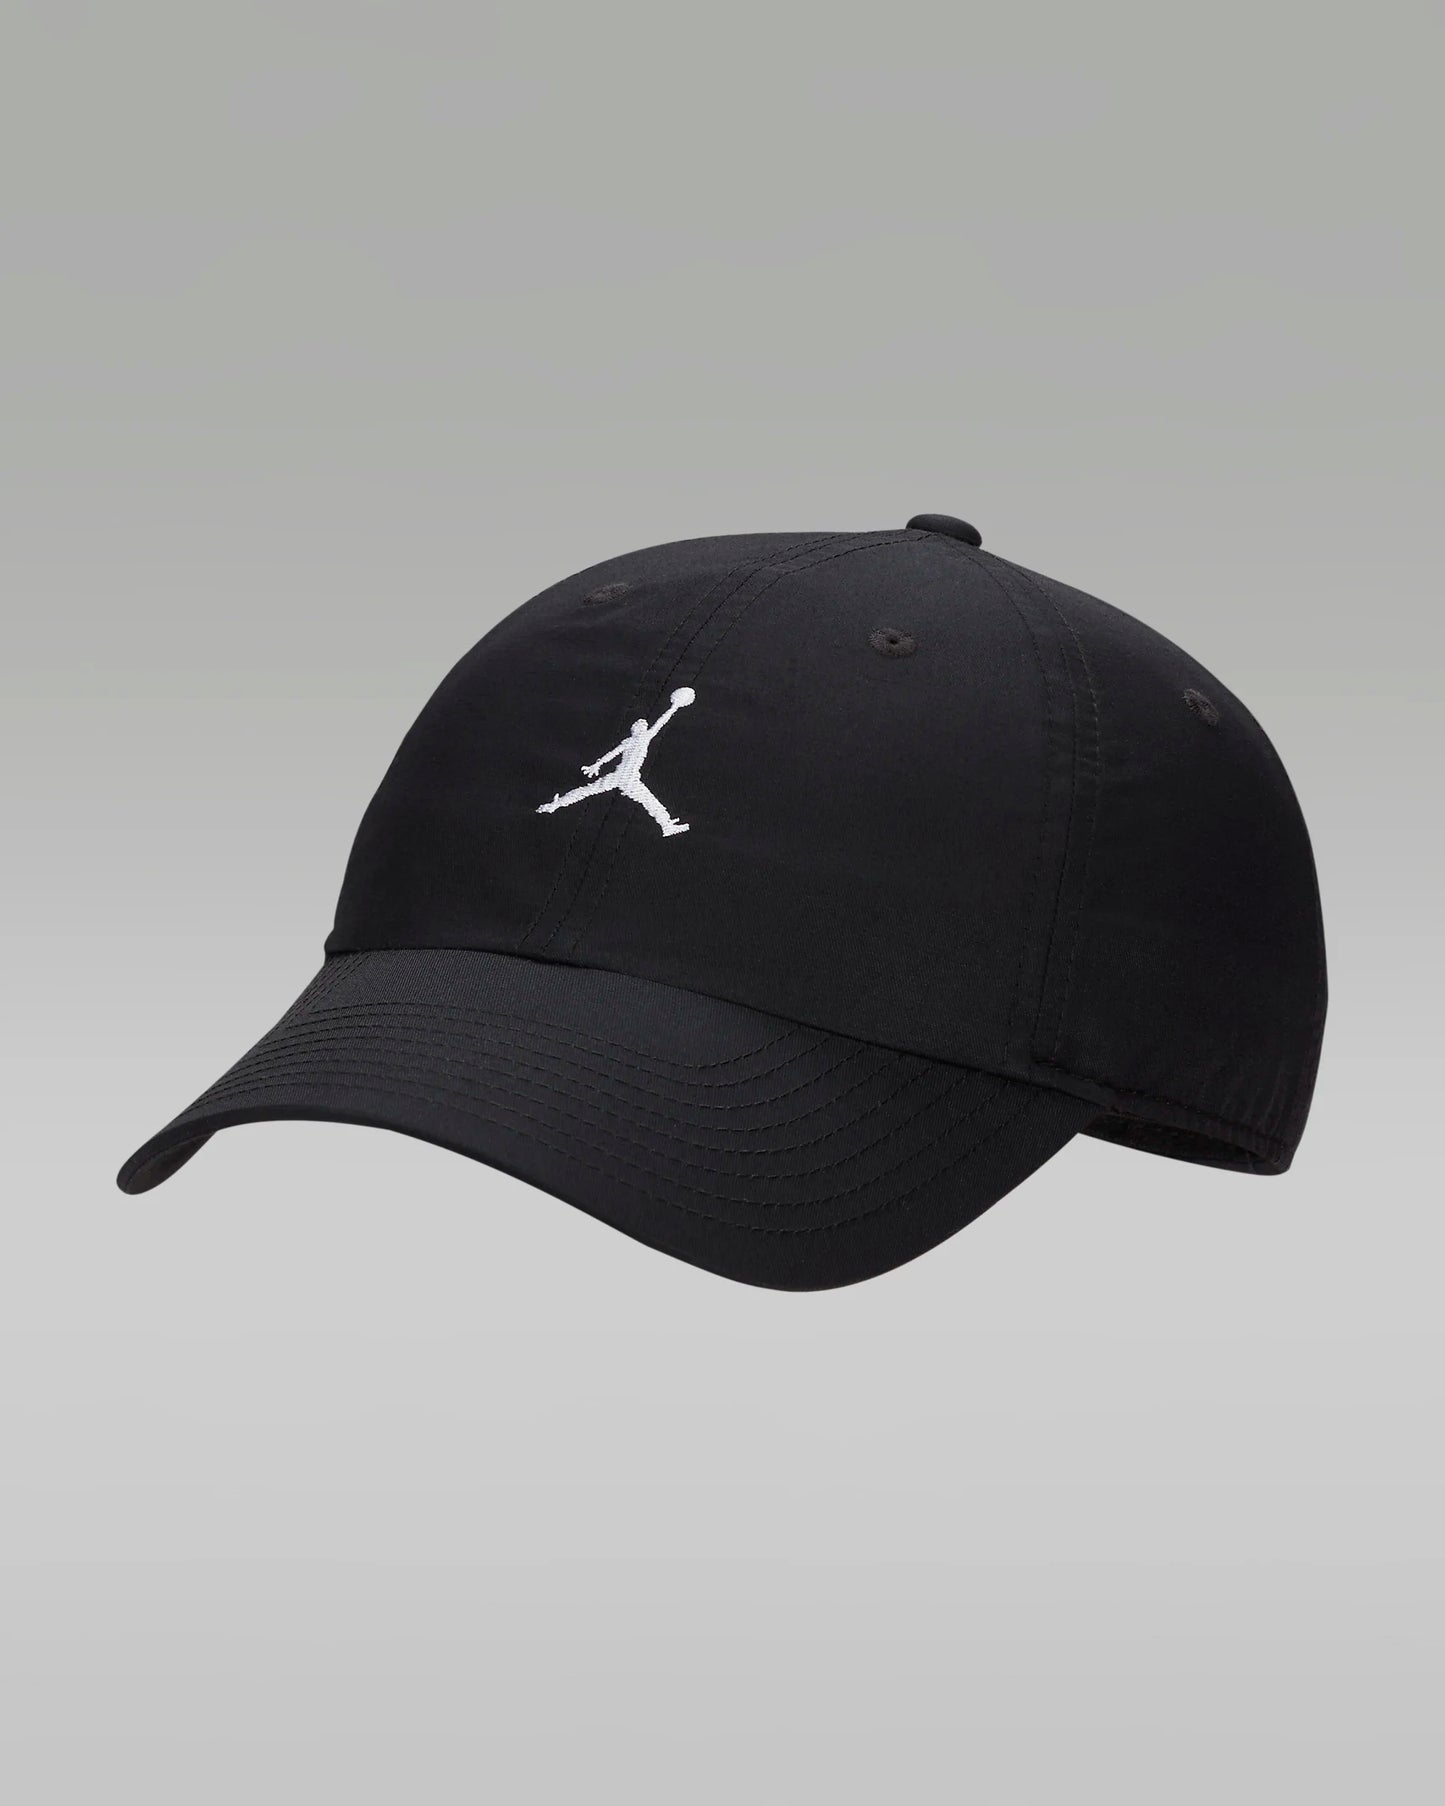 Jordan Club Cap Adjustable Unstructured Hat - Black